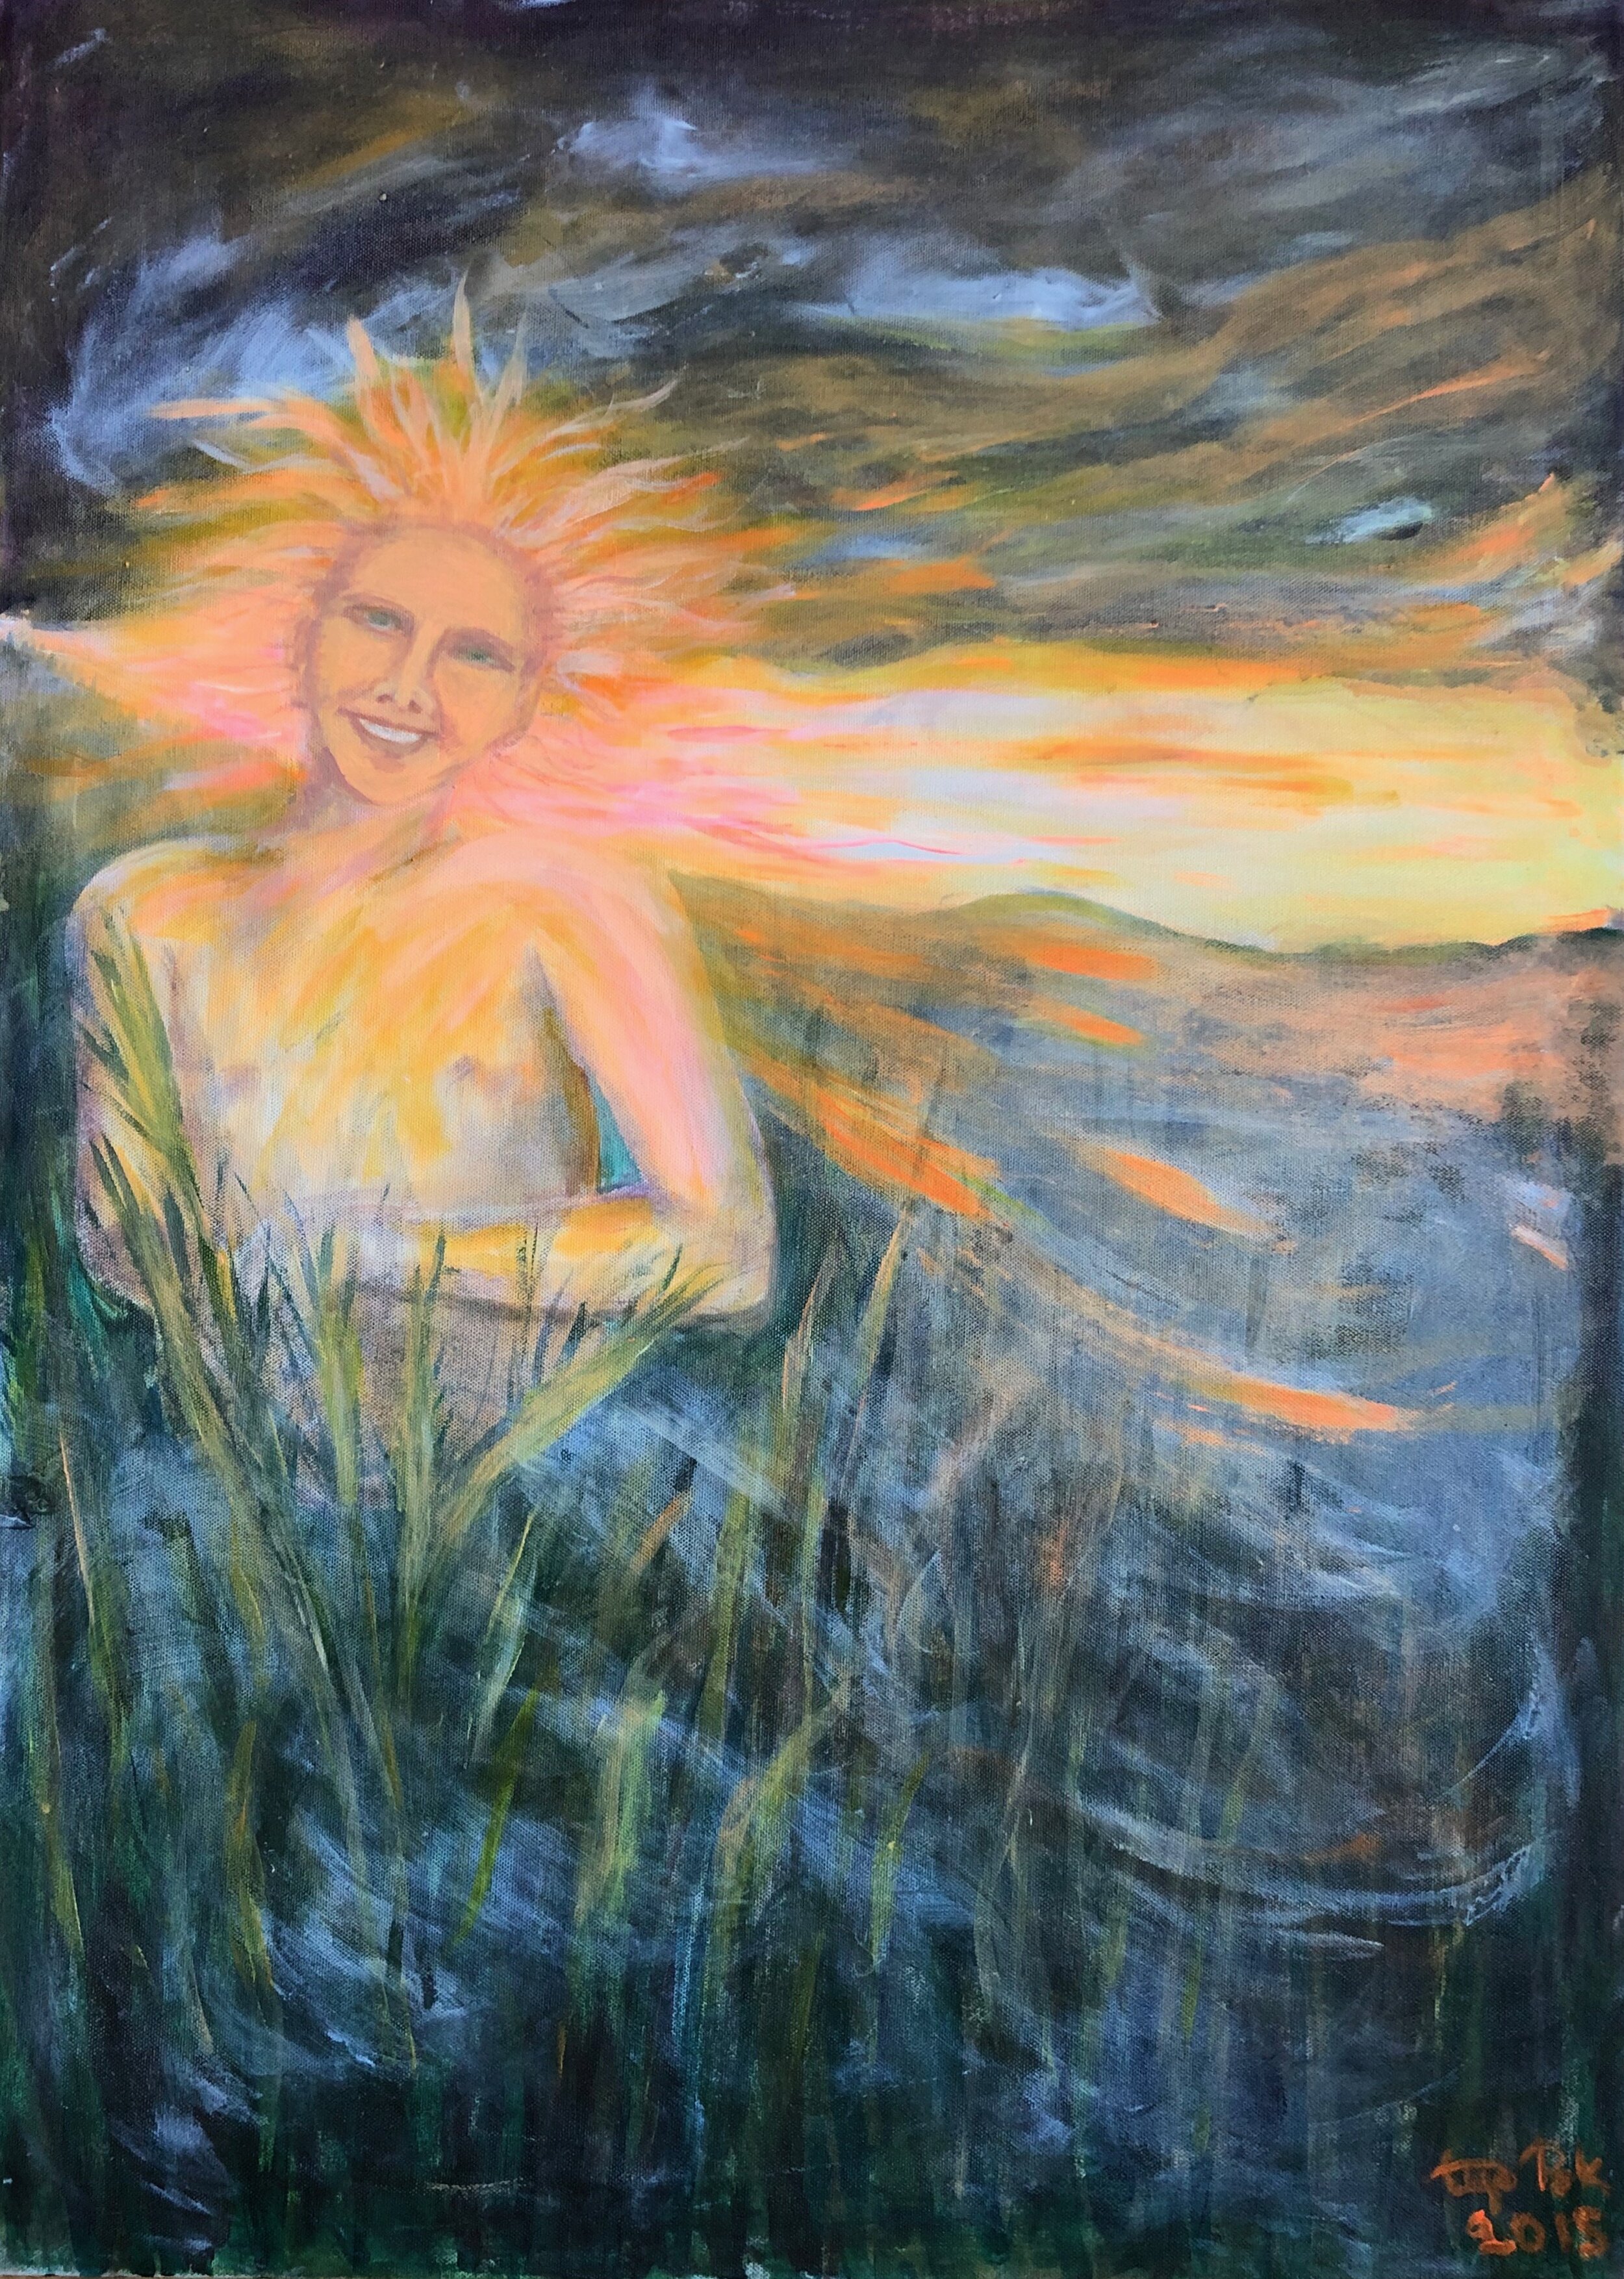  SMILING APOLLO, 2015, acrylic on canvas, 90x65cm 